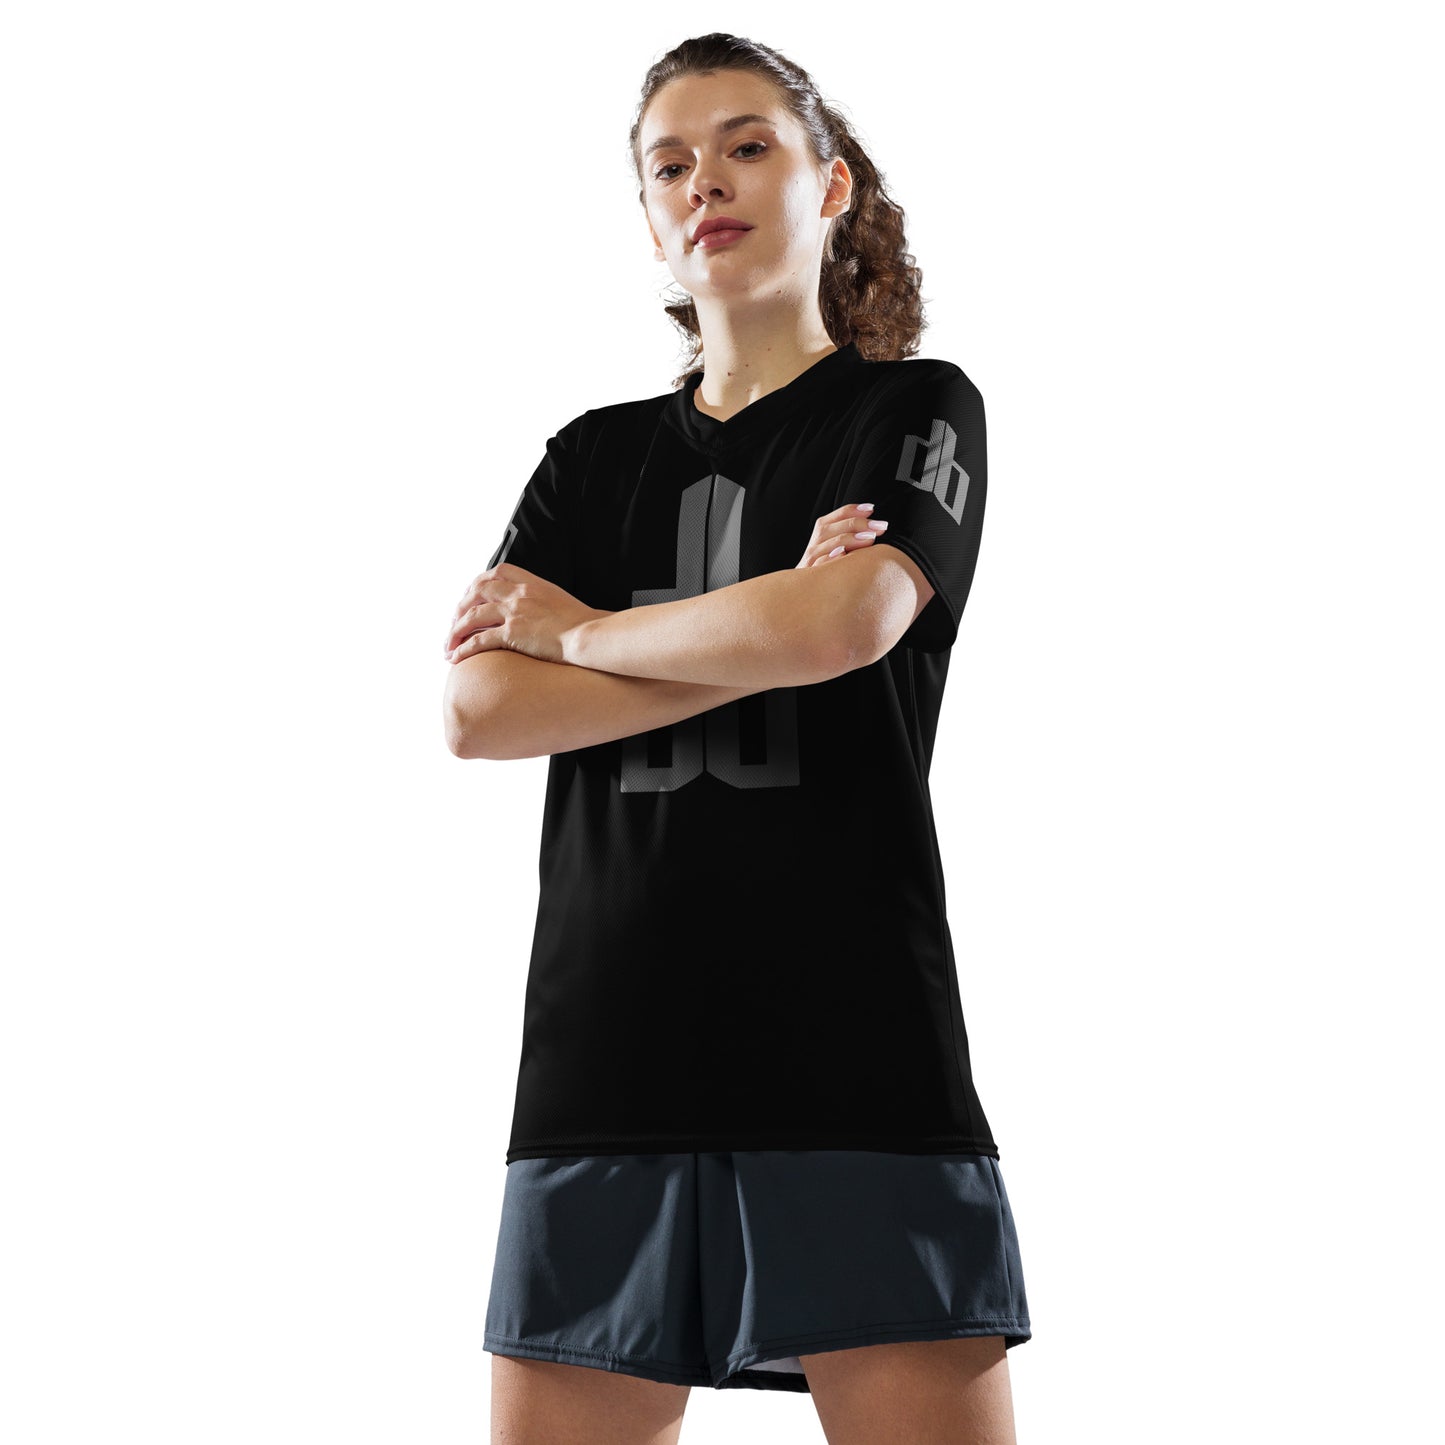 "SKY RISER" Recycled unisex sports jersey - Black